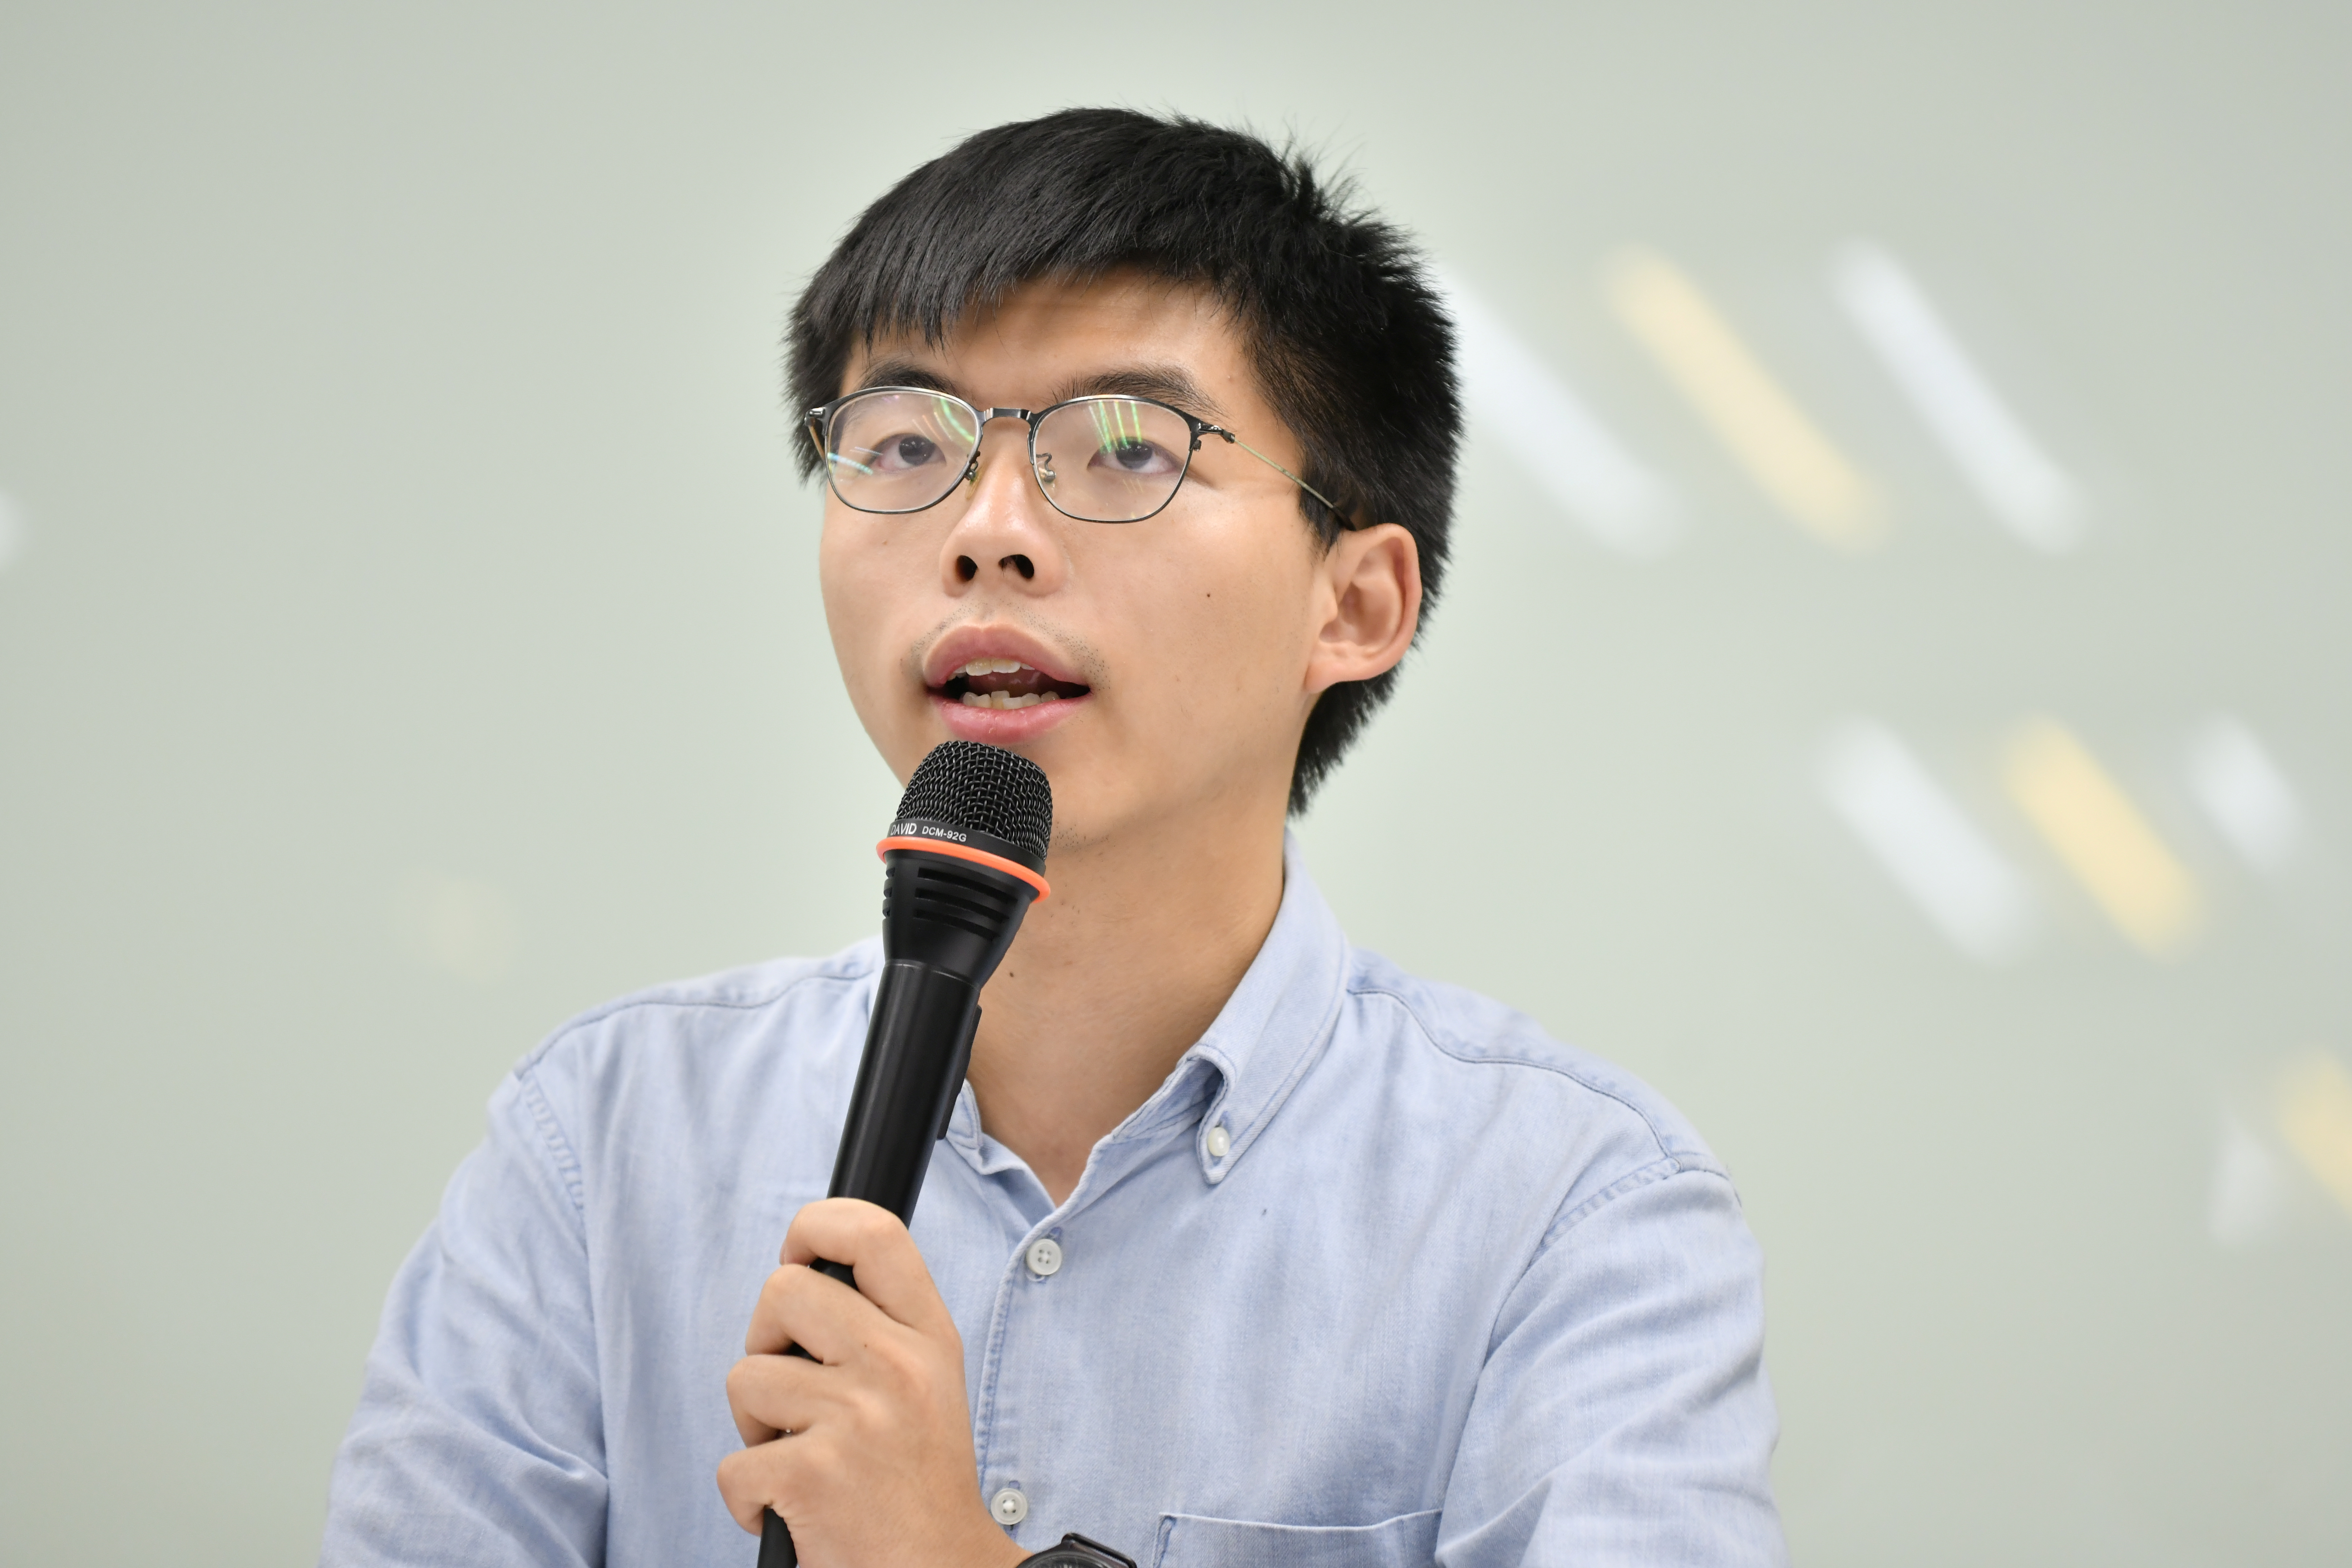 Hong Kong: vuelven a arrestar al líder activista Joshua Wong